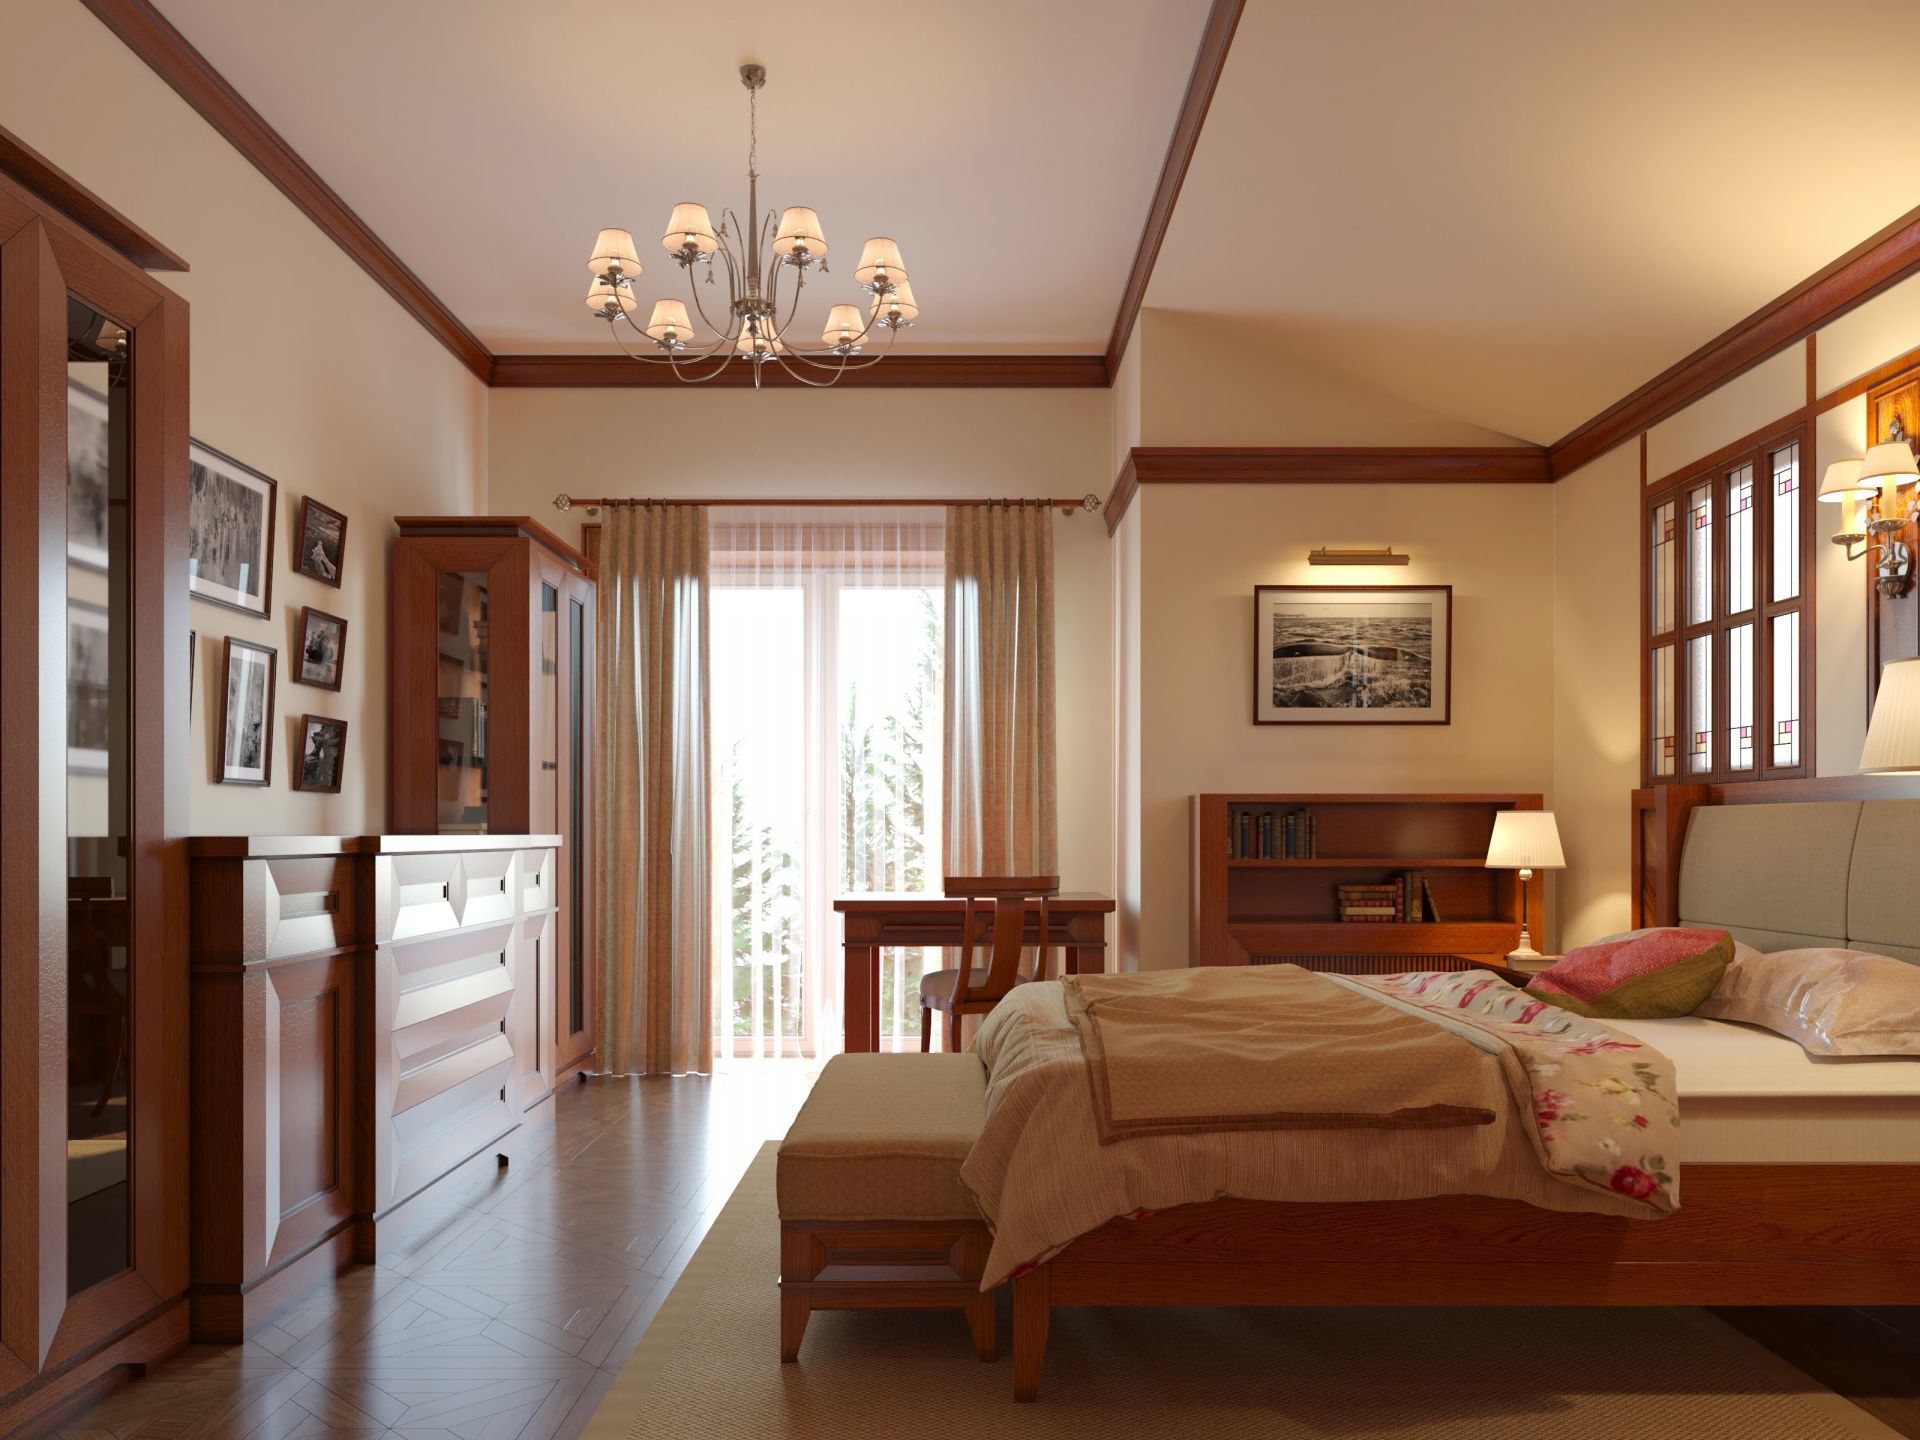 American-style bedroom interior